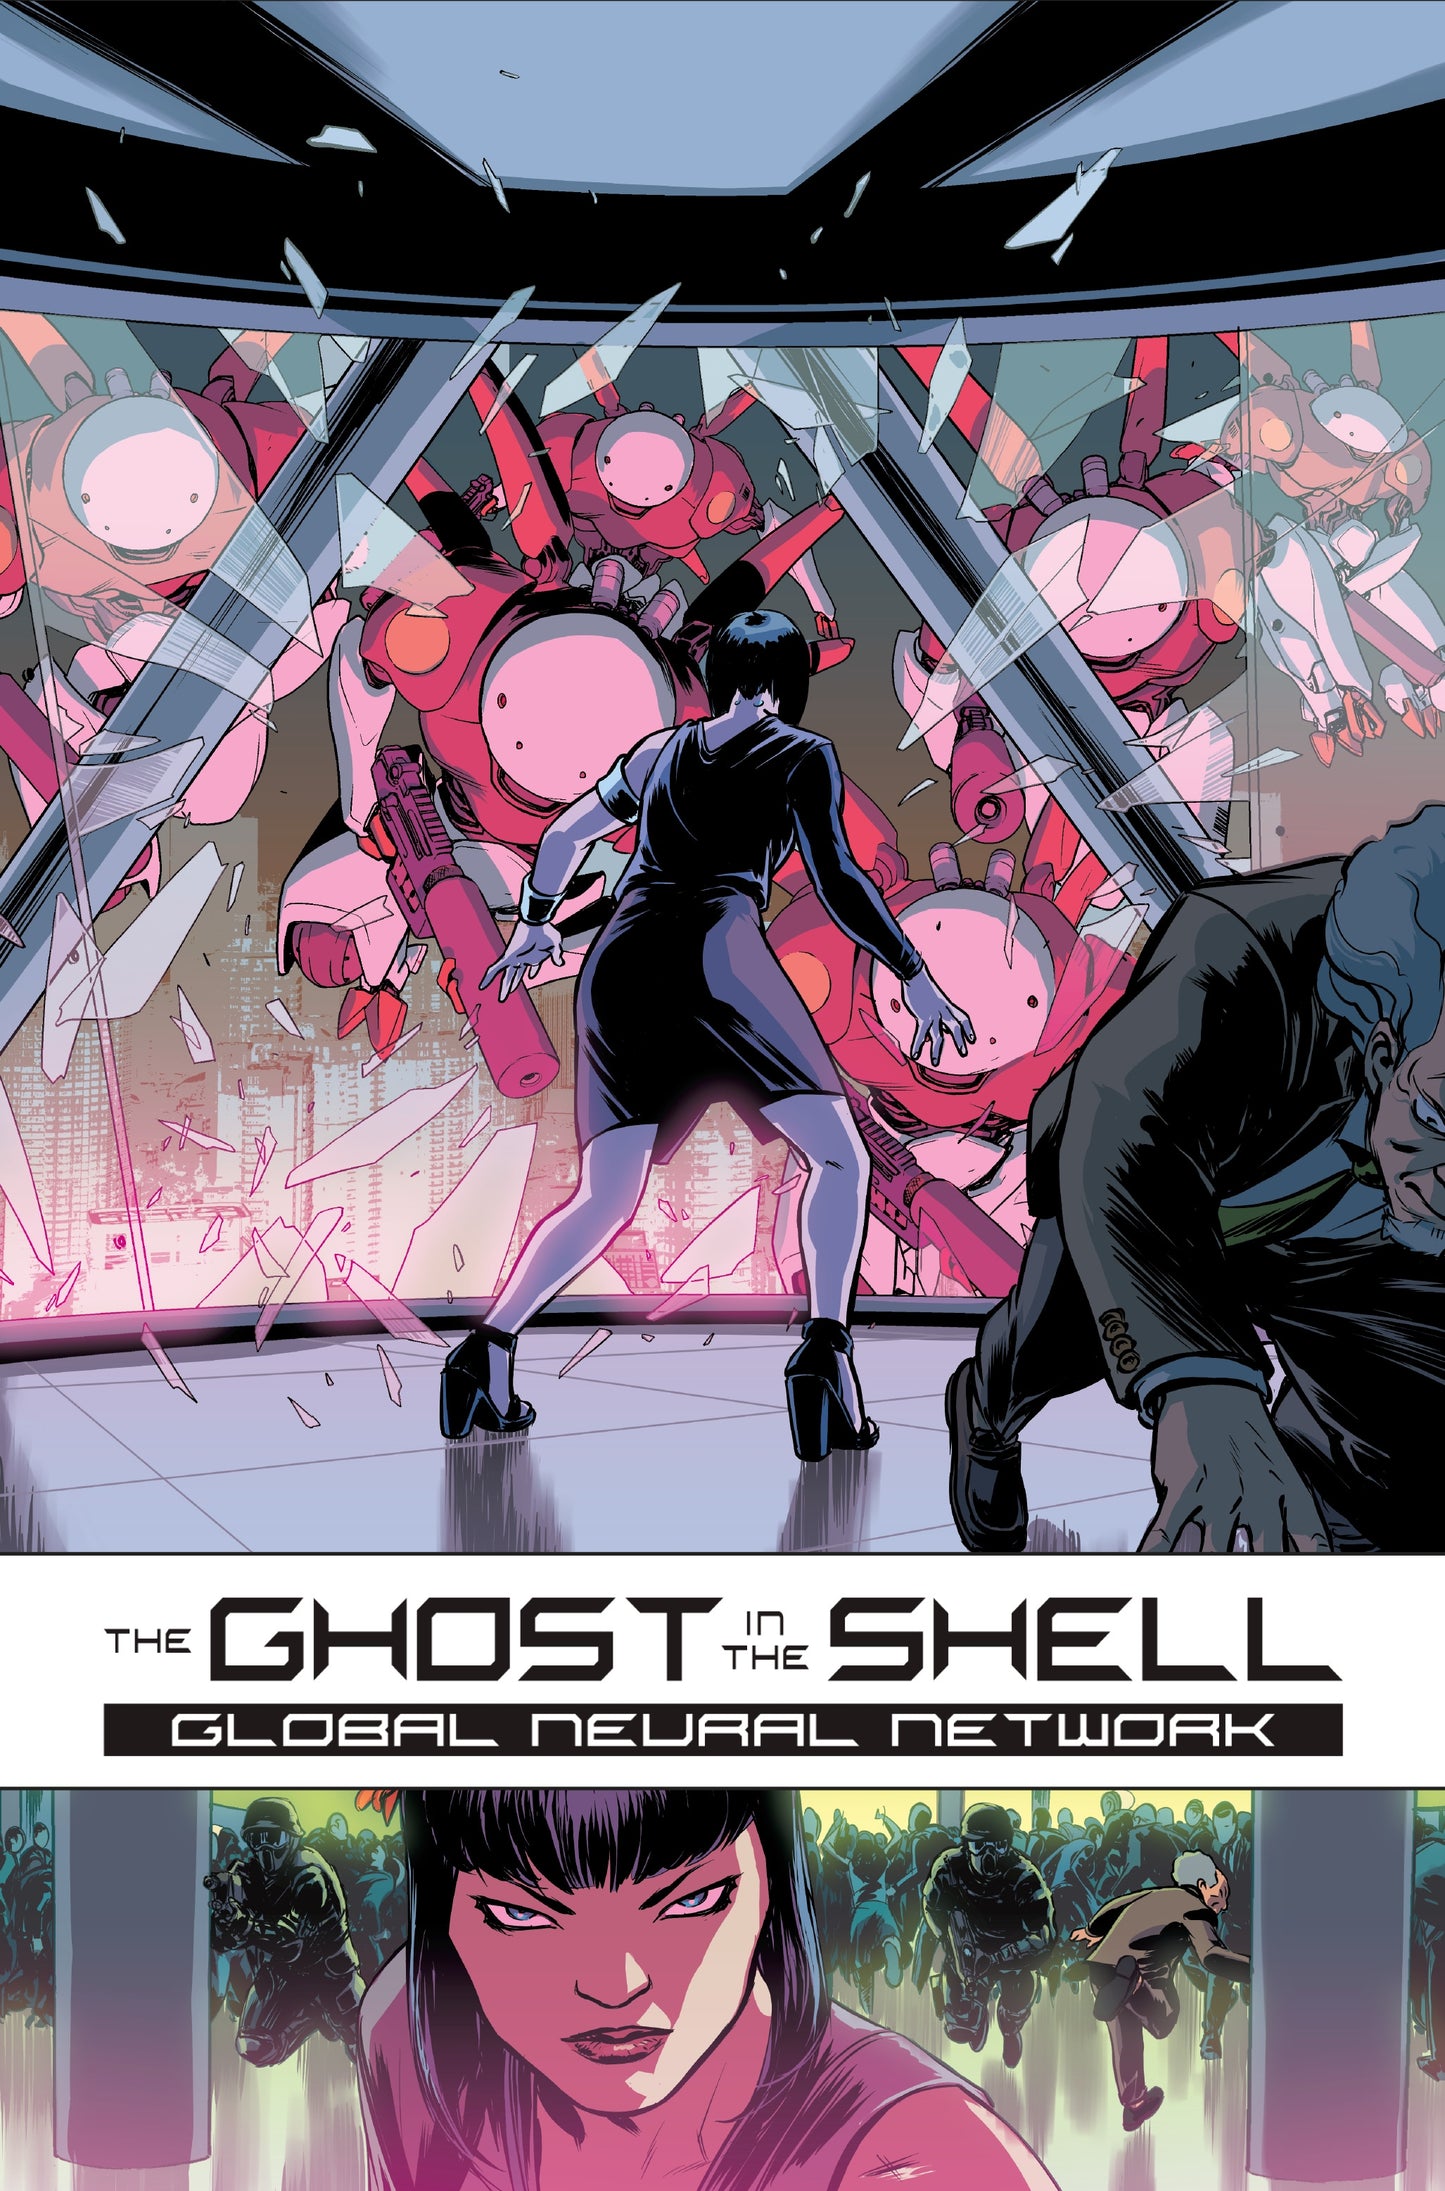 The Ghost In The Shell Global Neural Network - Manga Warehouse